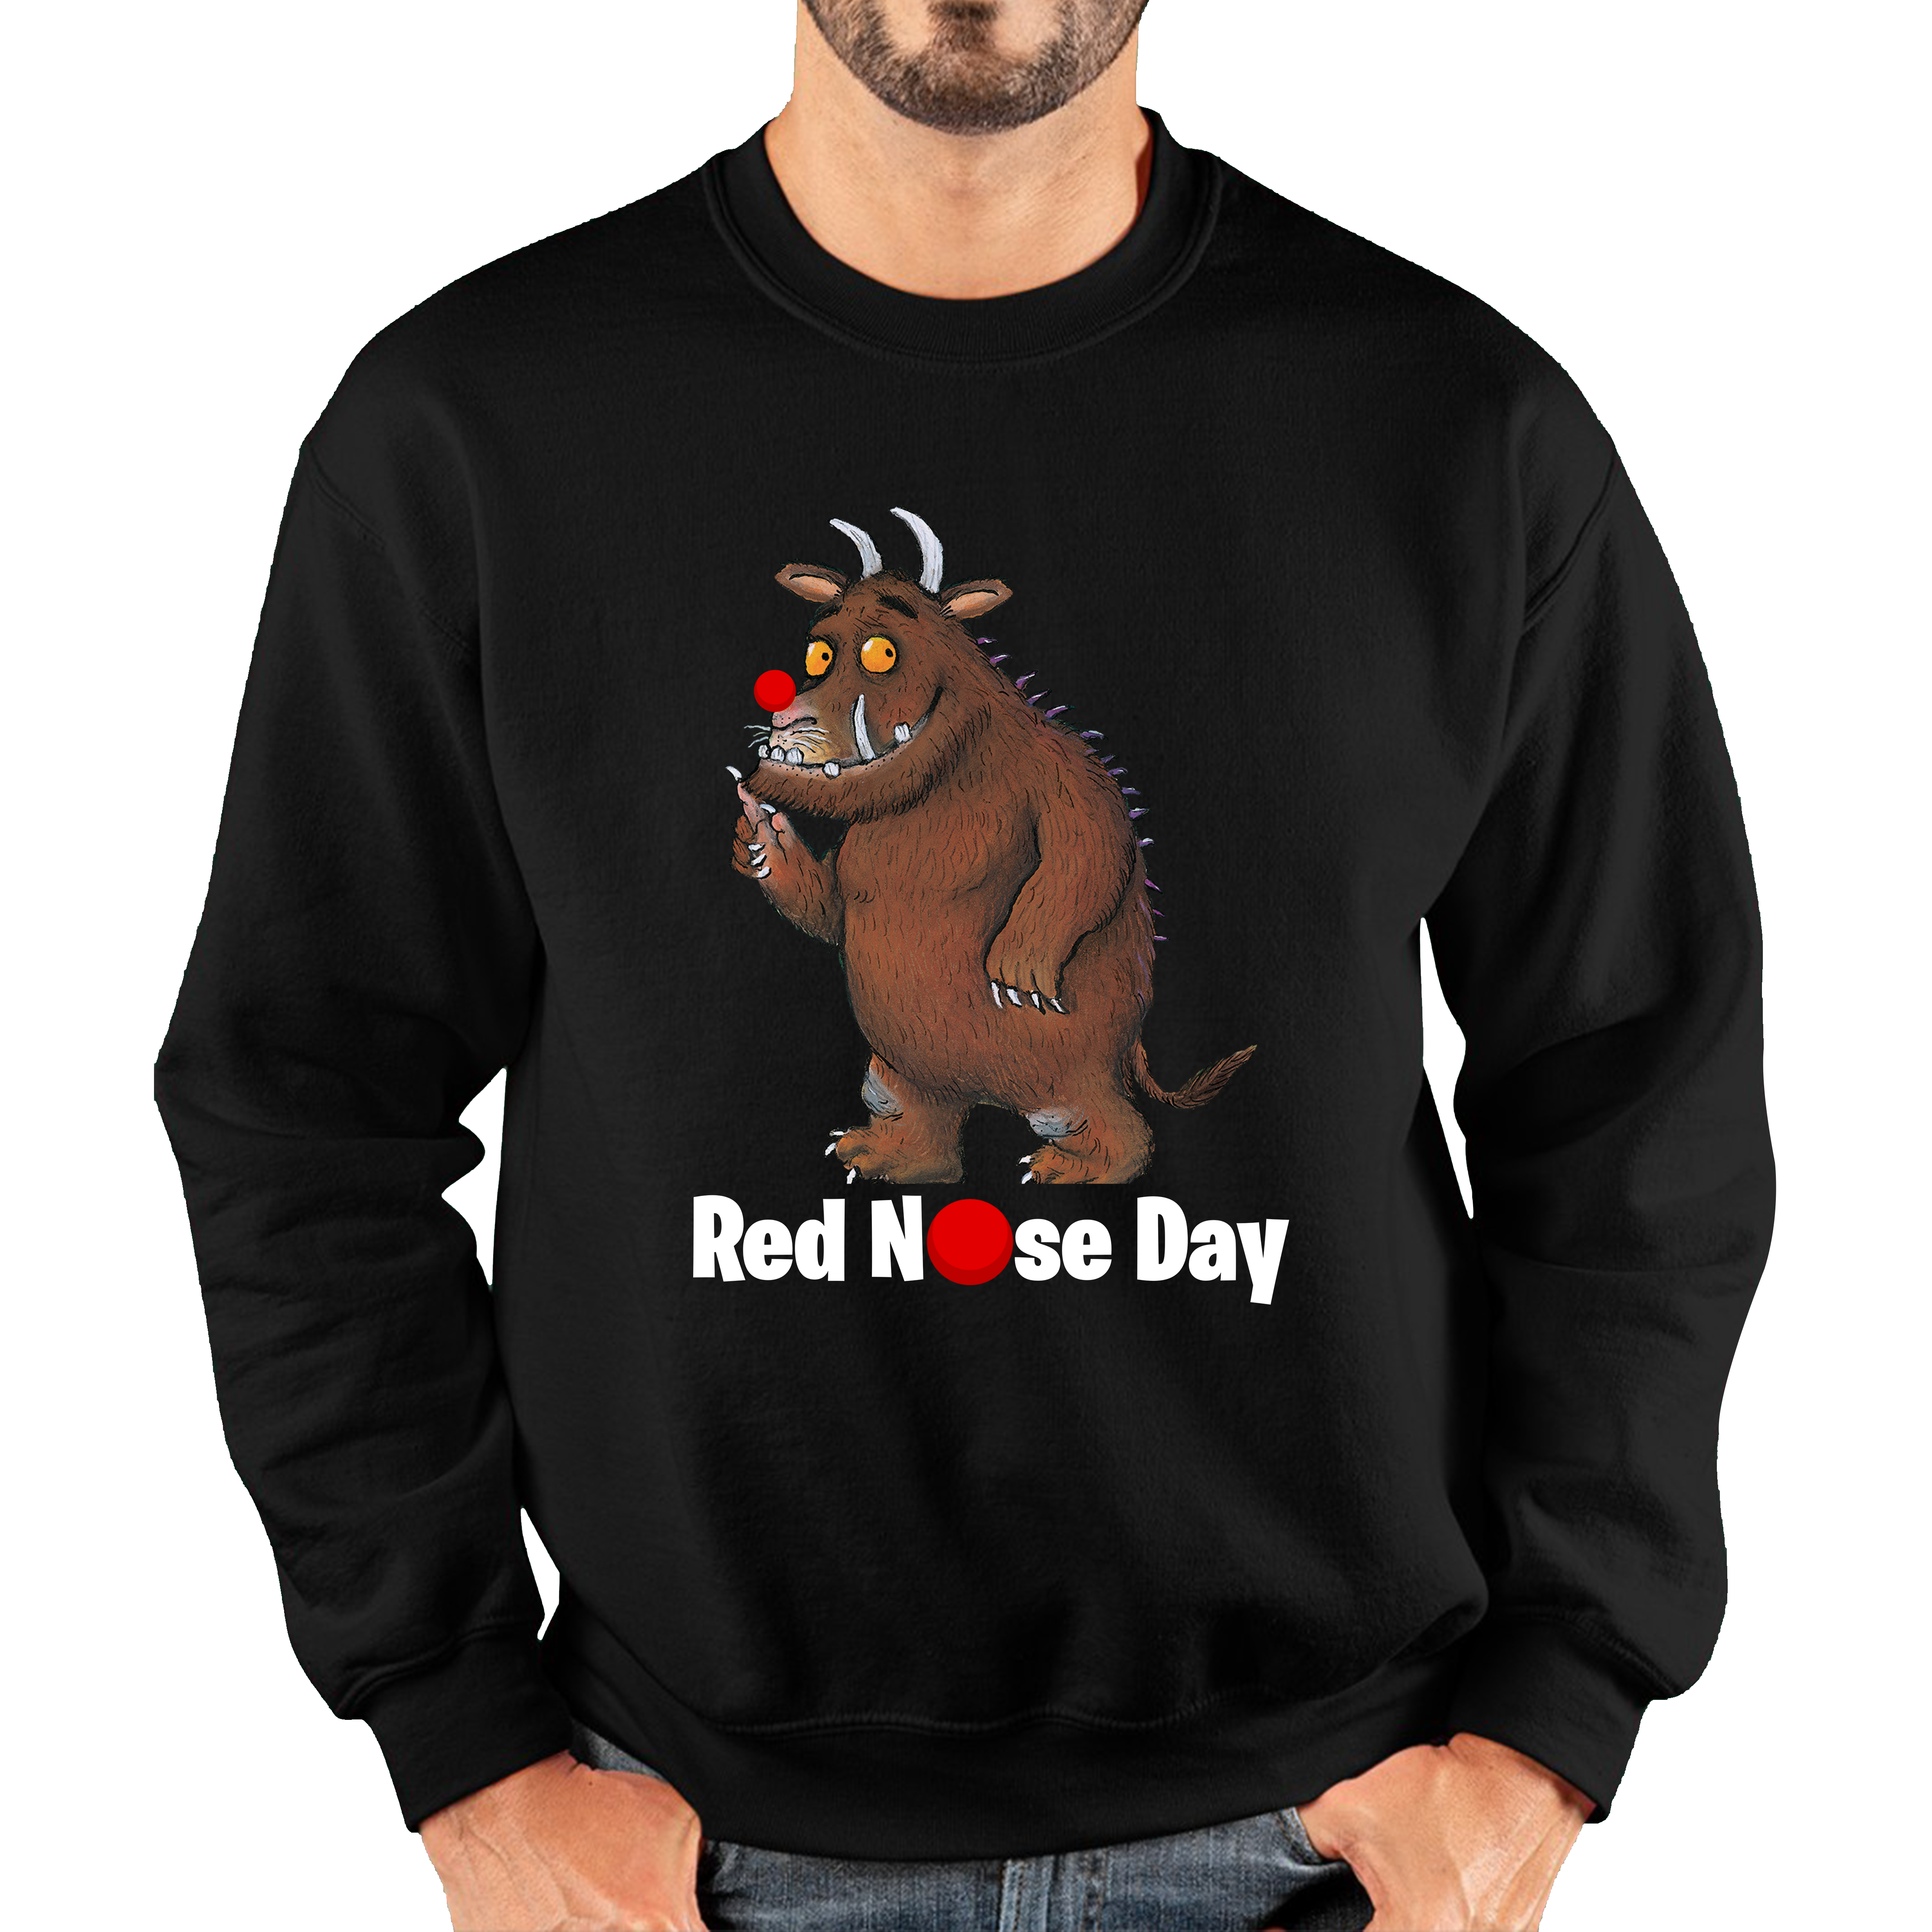 The Gruffalo Red Nose Day Sweater UK